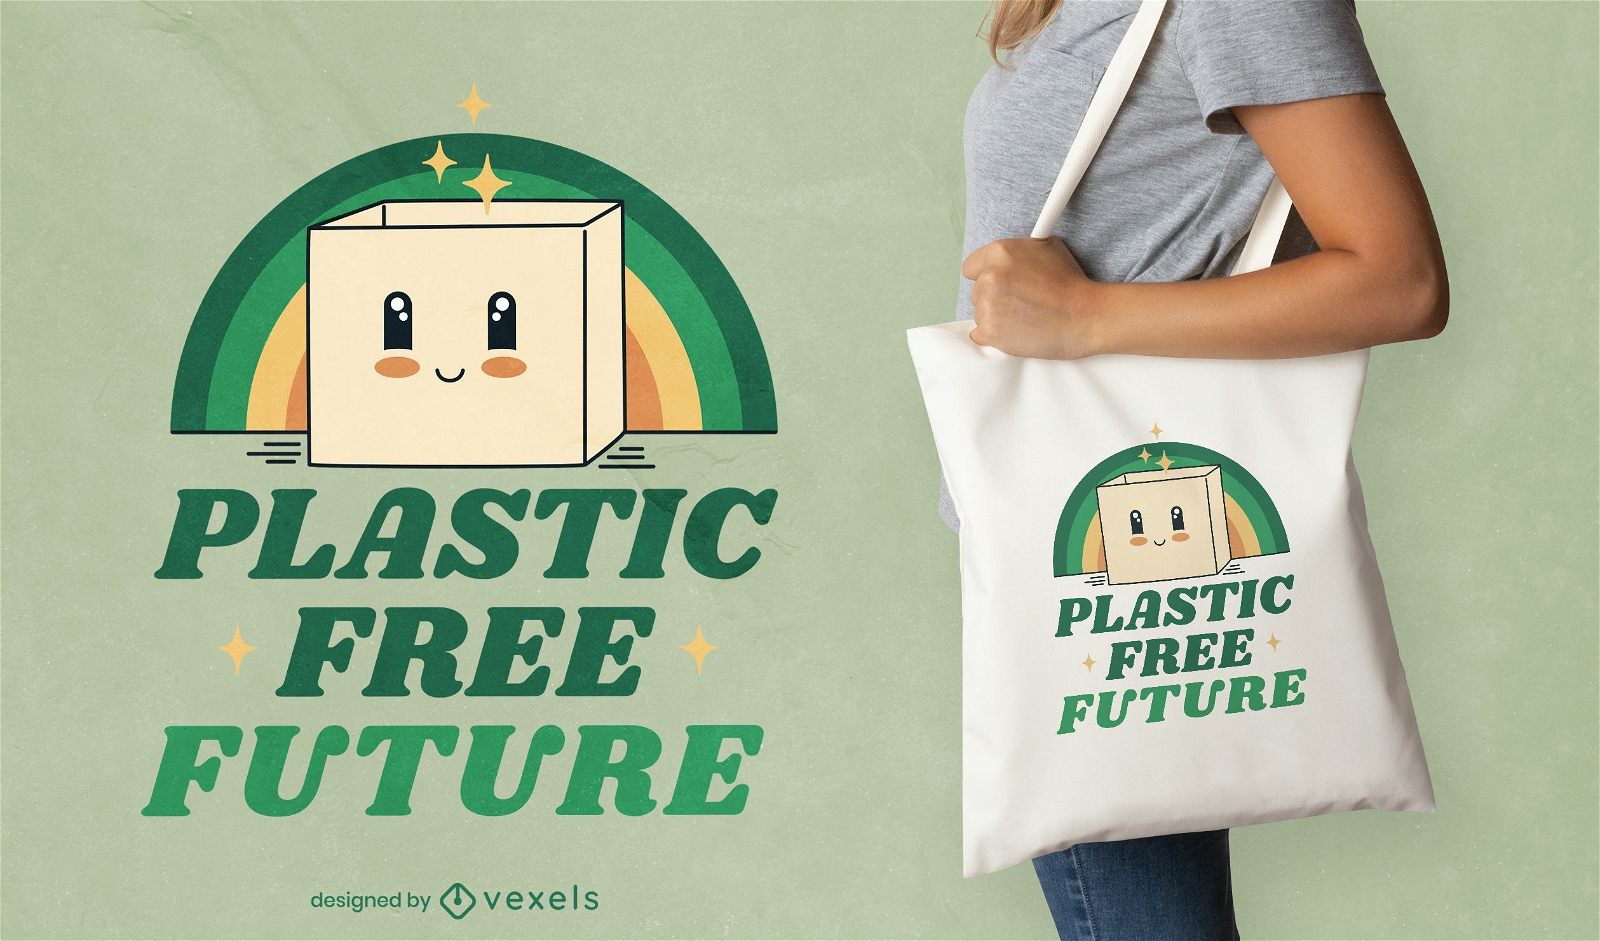 Design de sacola futura sem plástico